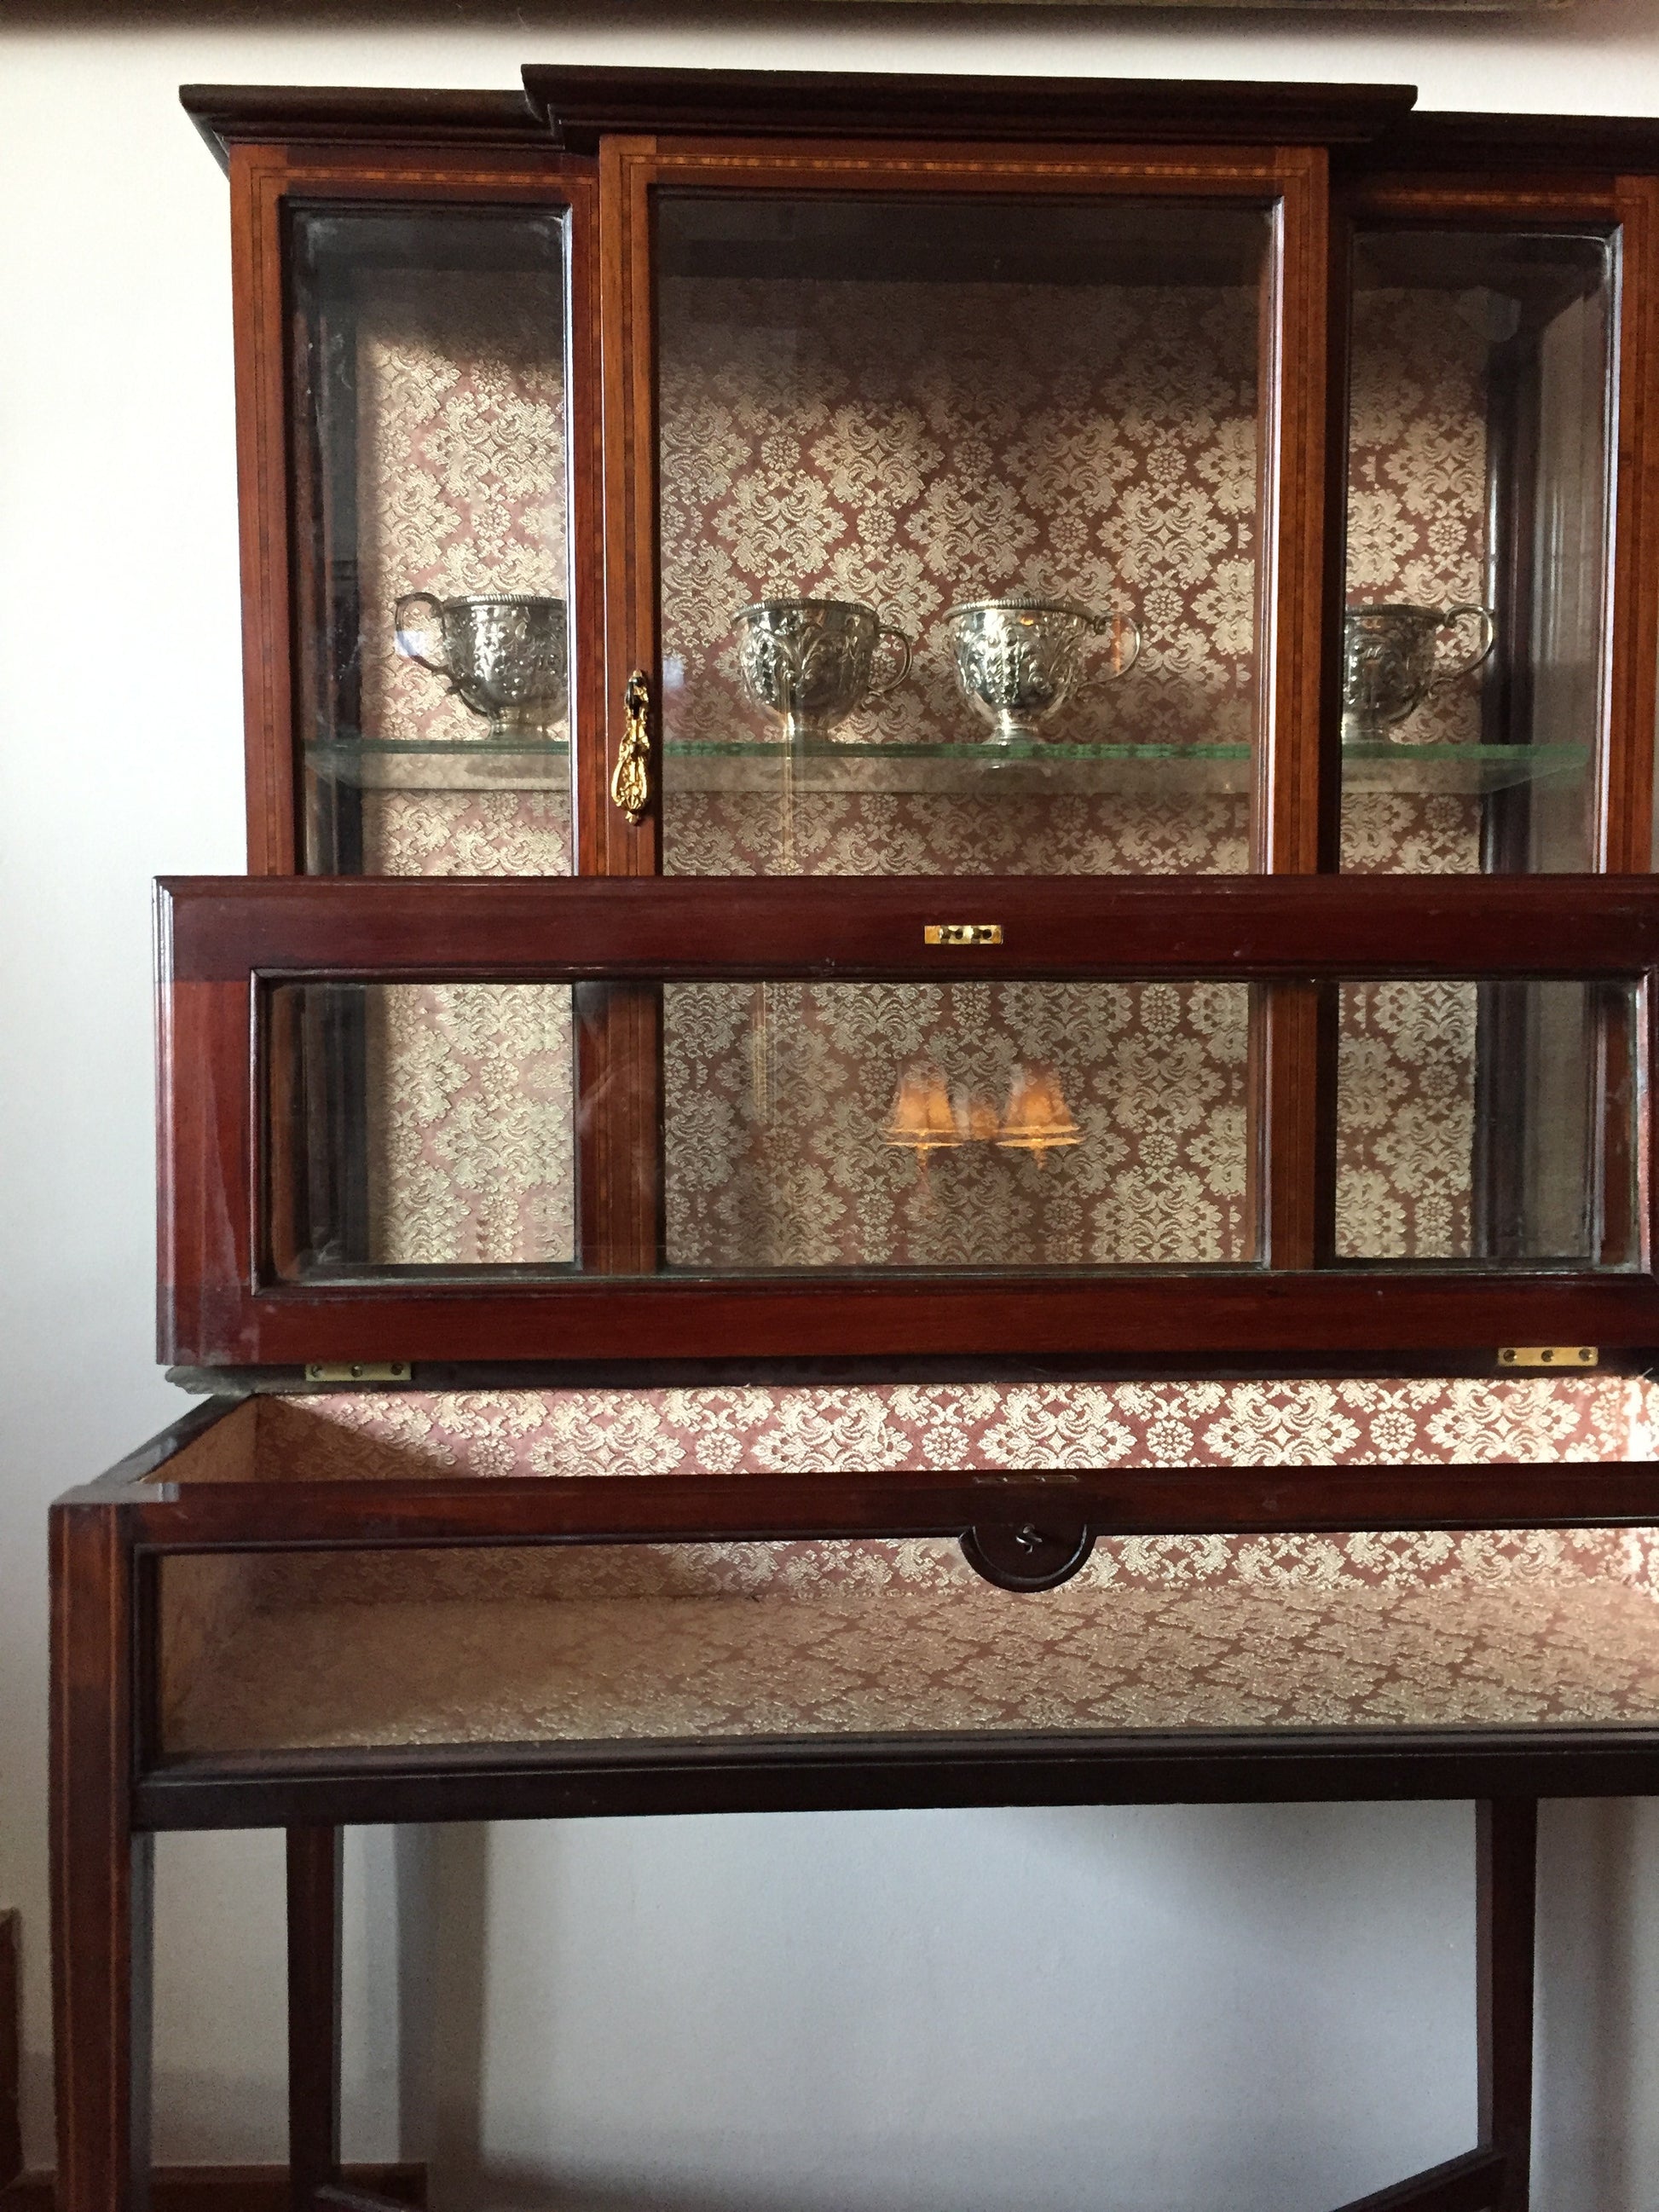 Antica vetrinetta inglese 1800 in mogano stile vittoriano intarsiata